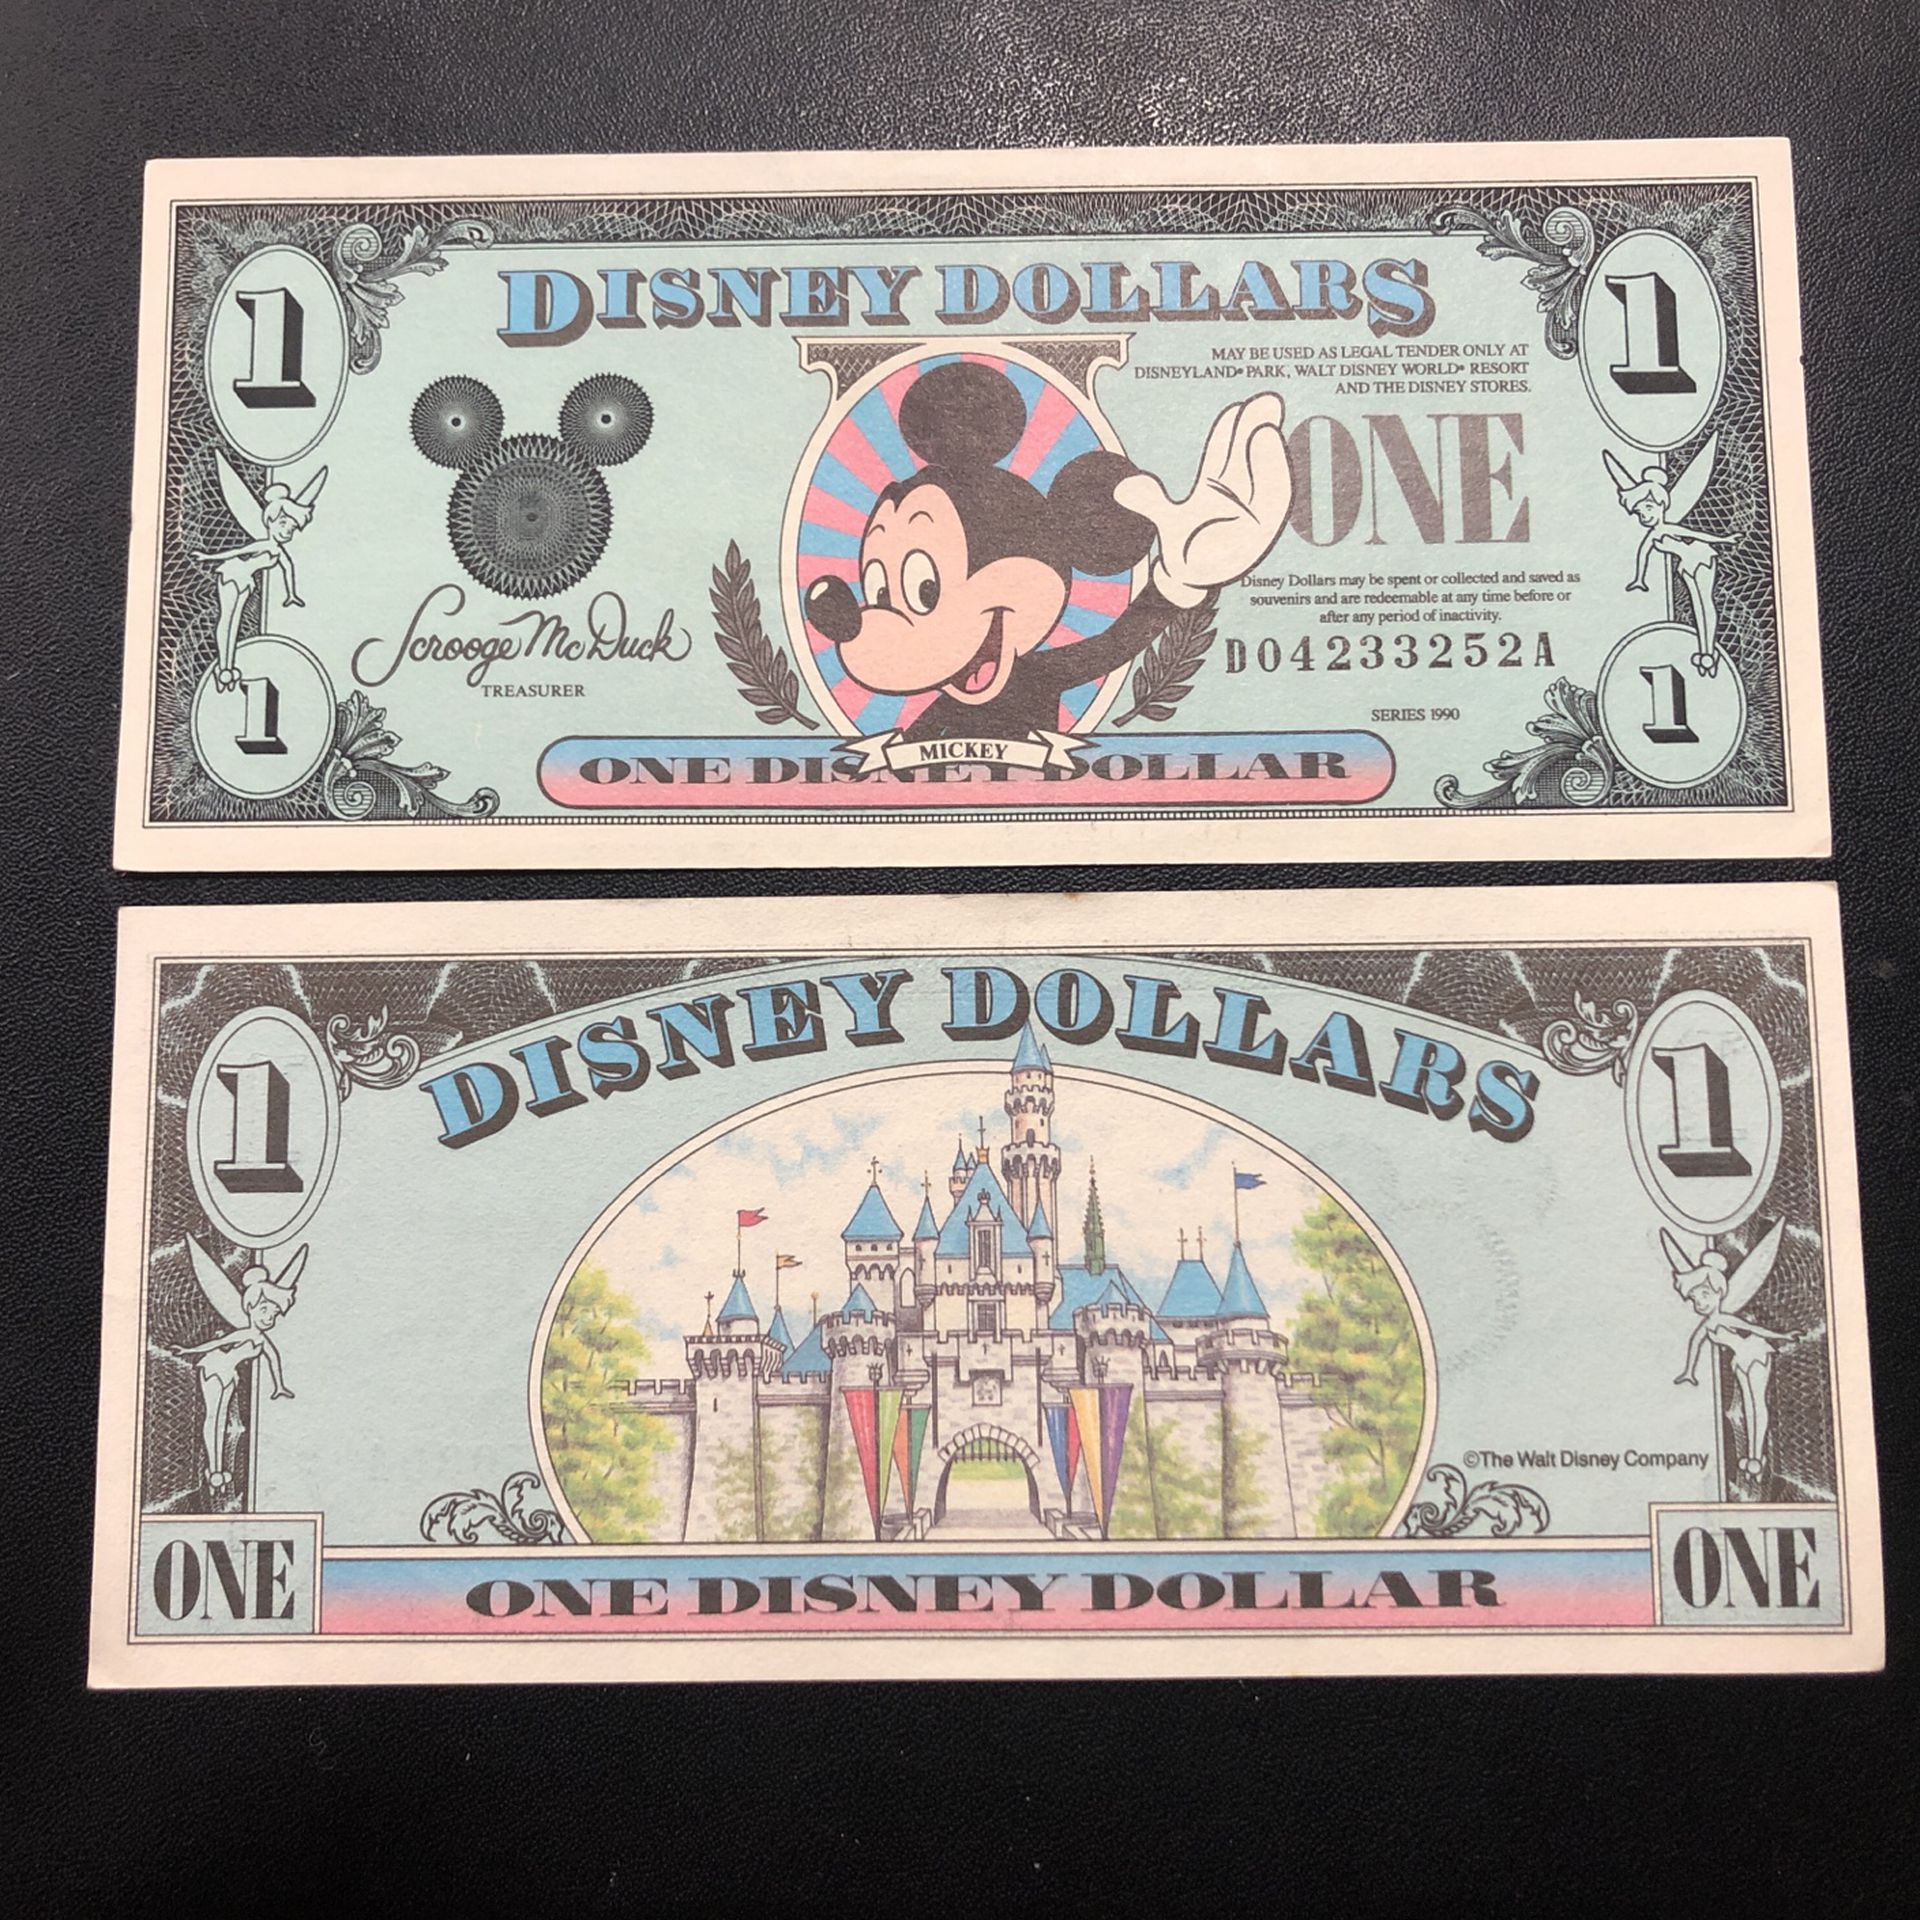 Series 1990 Mint Condition Disney Dollars (2) Of Them